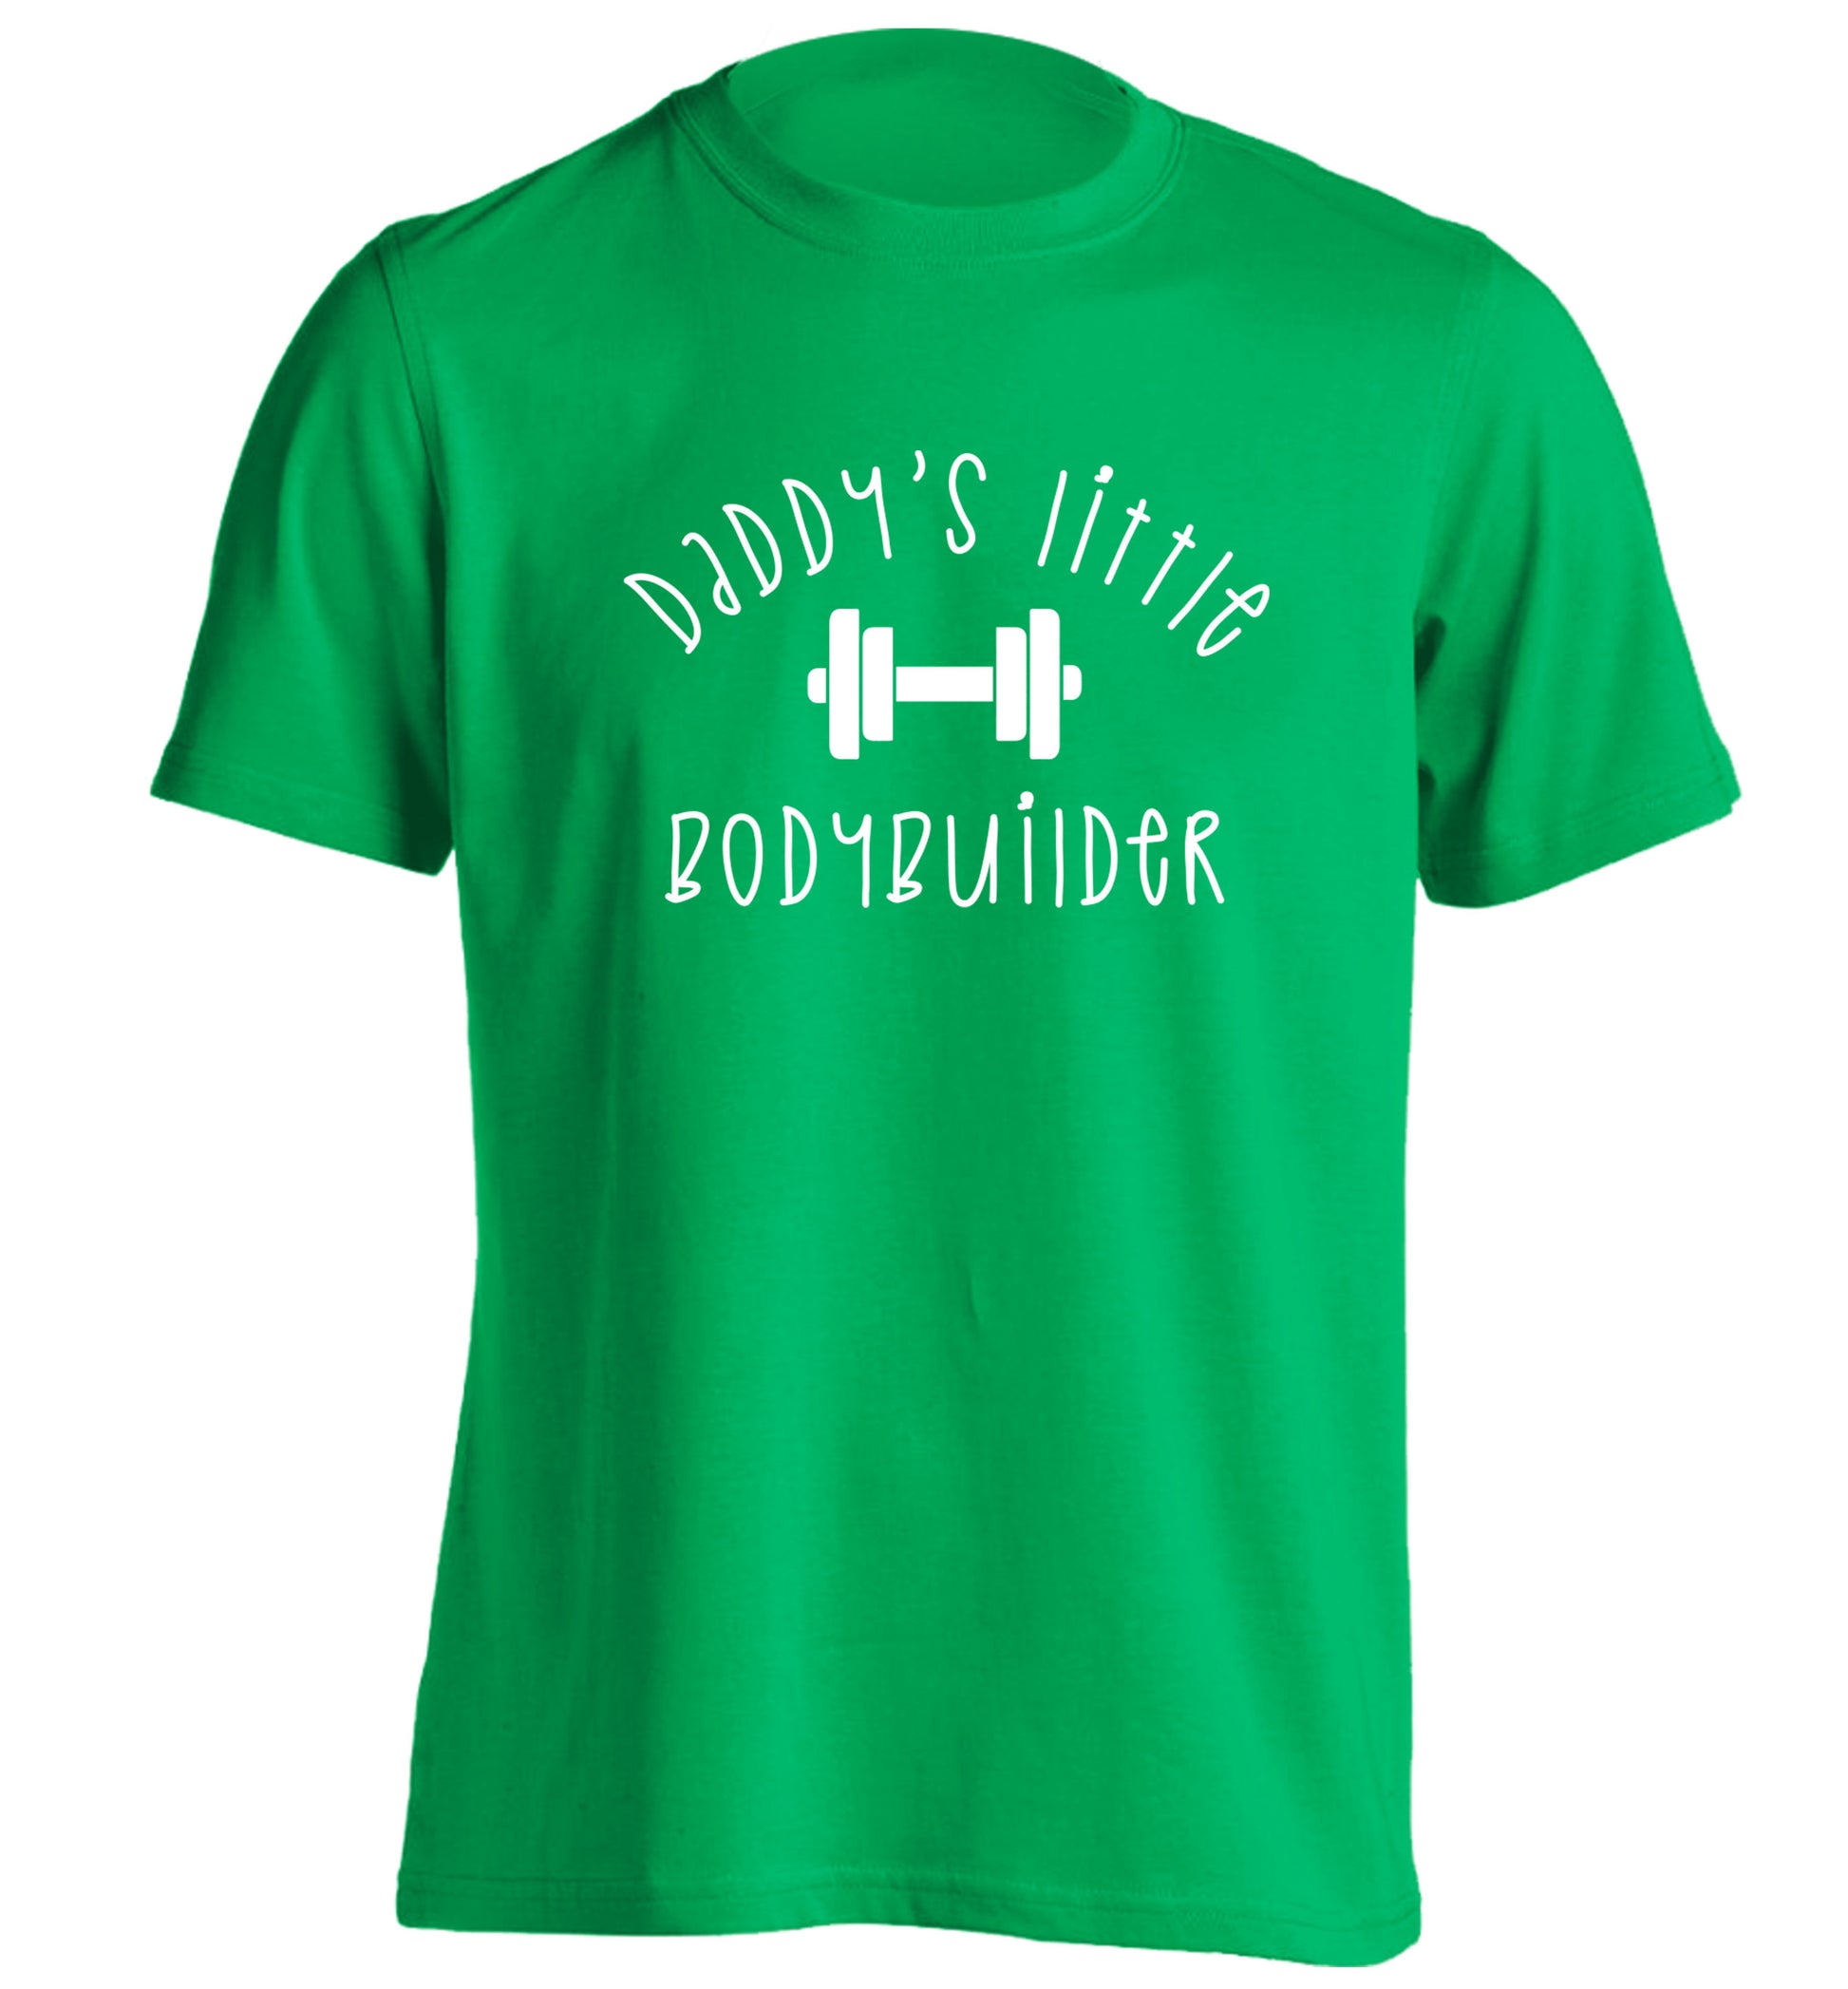 Daddy's little bodybuilder adults unisex green Tshirt 2XL